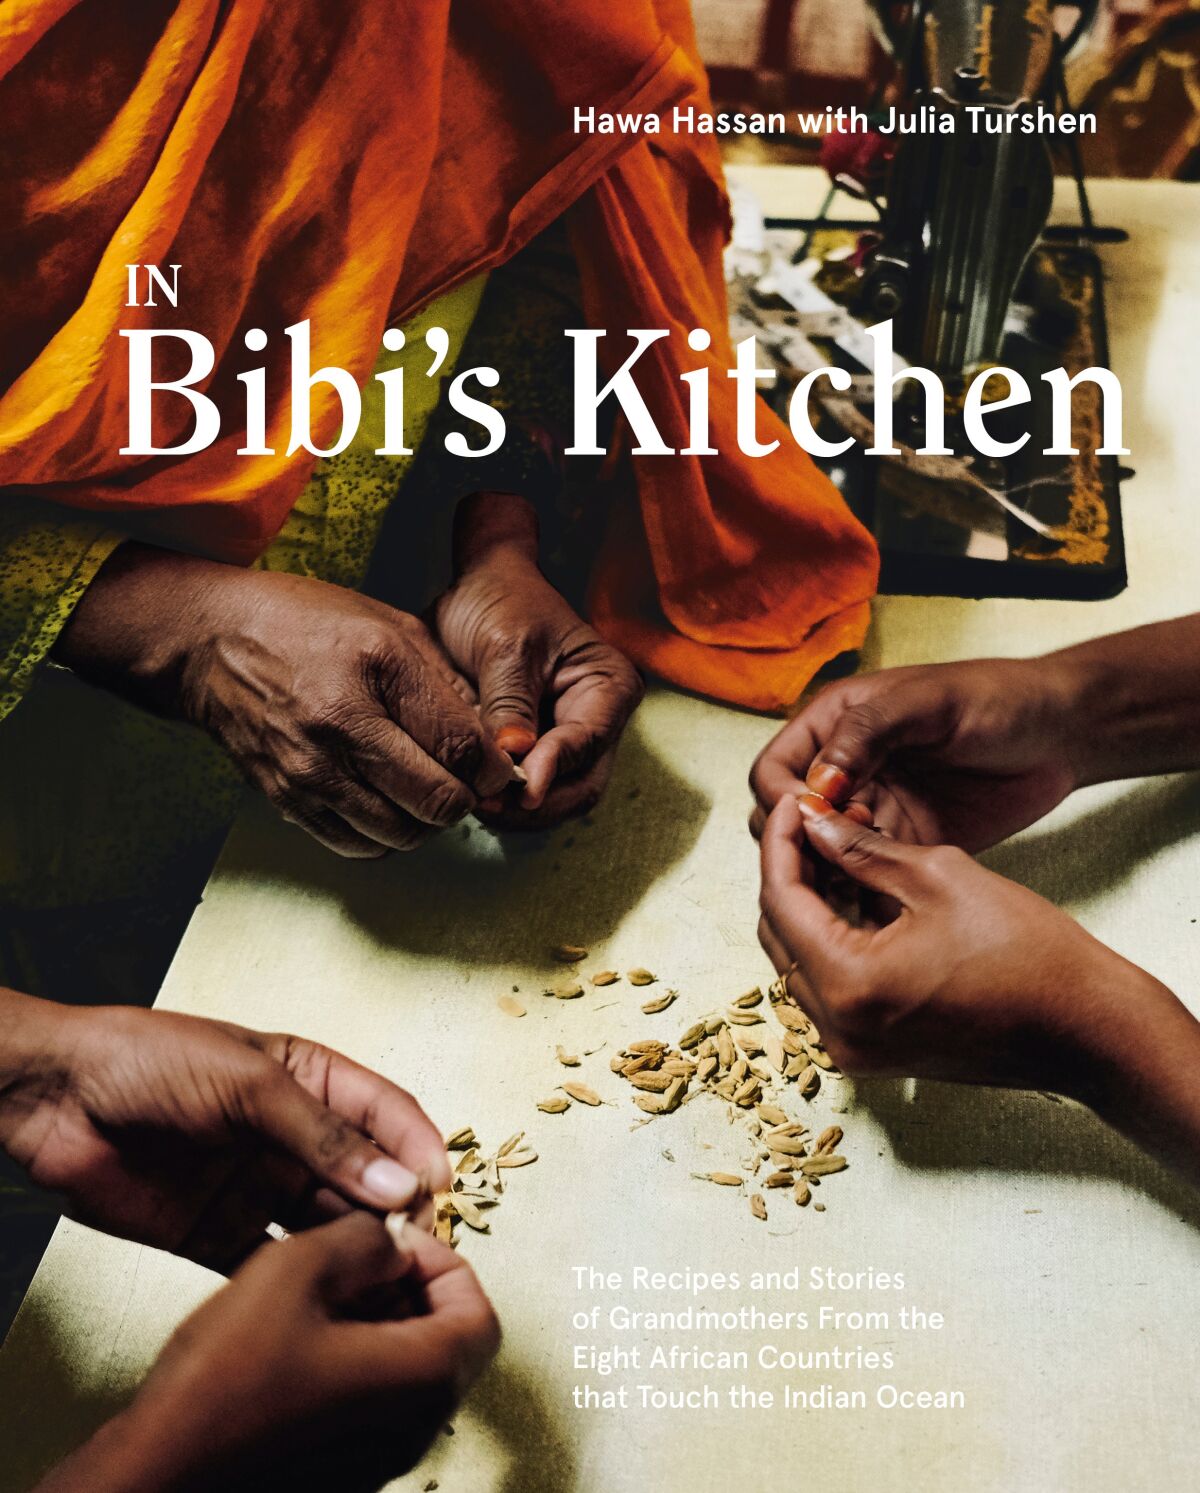 In Bibi's Kitchen by Hawa Hassan with Julia Turshen